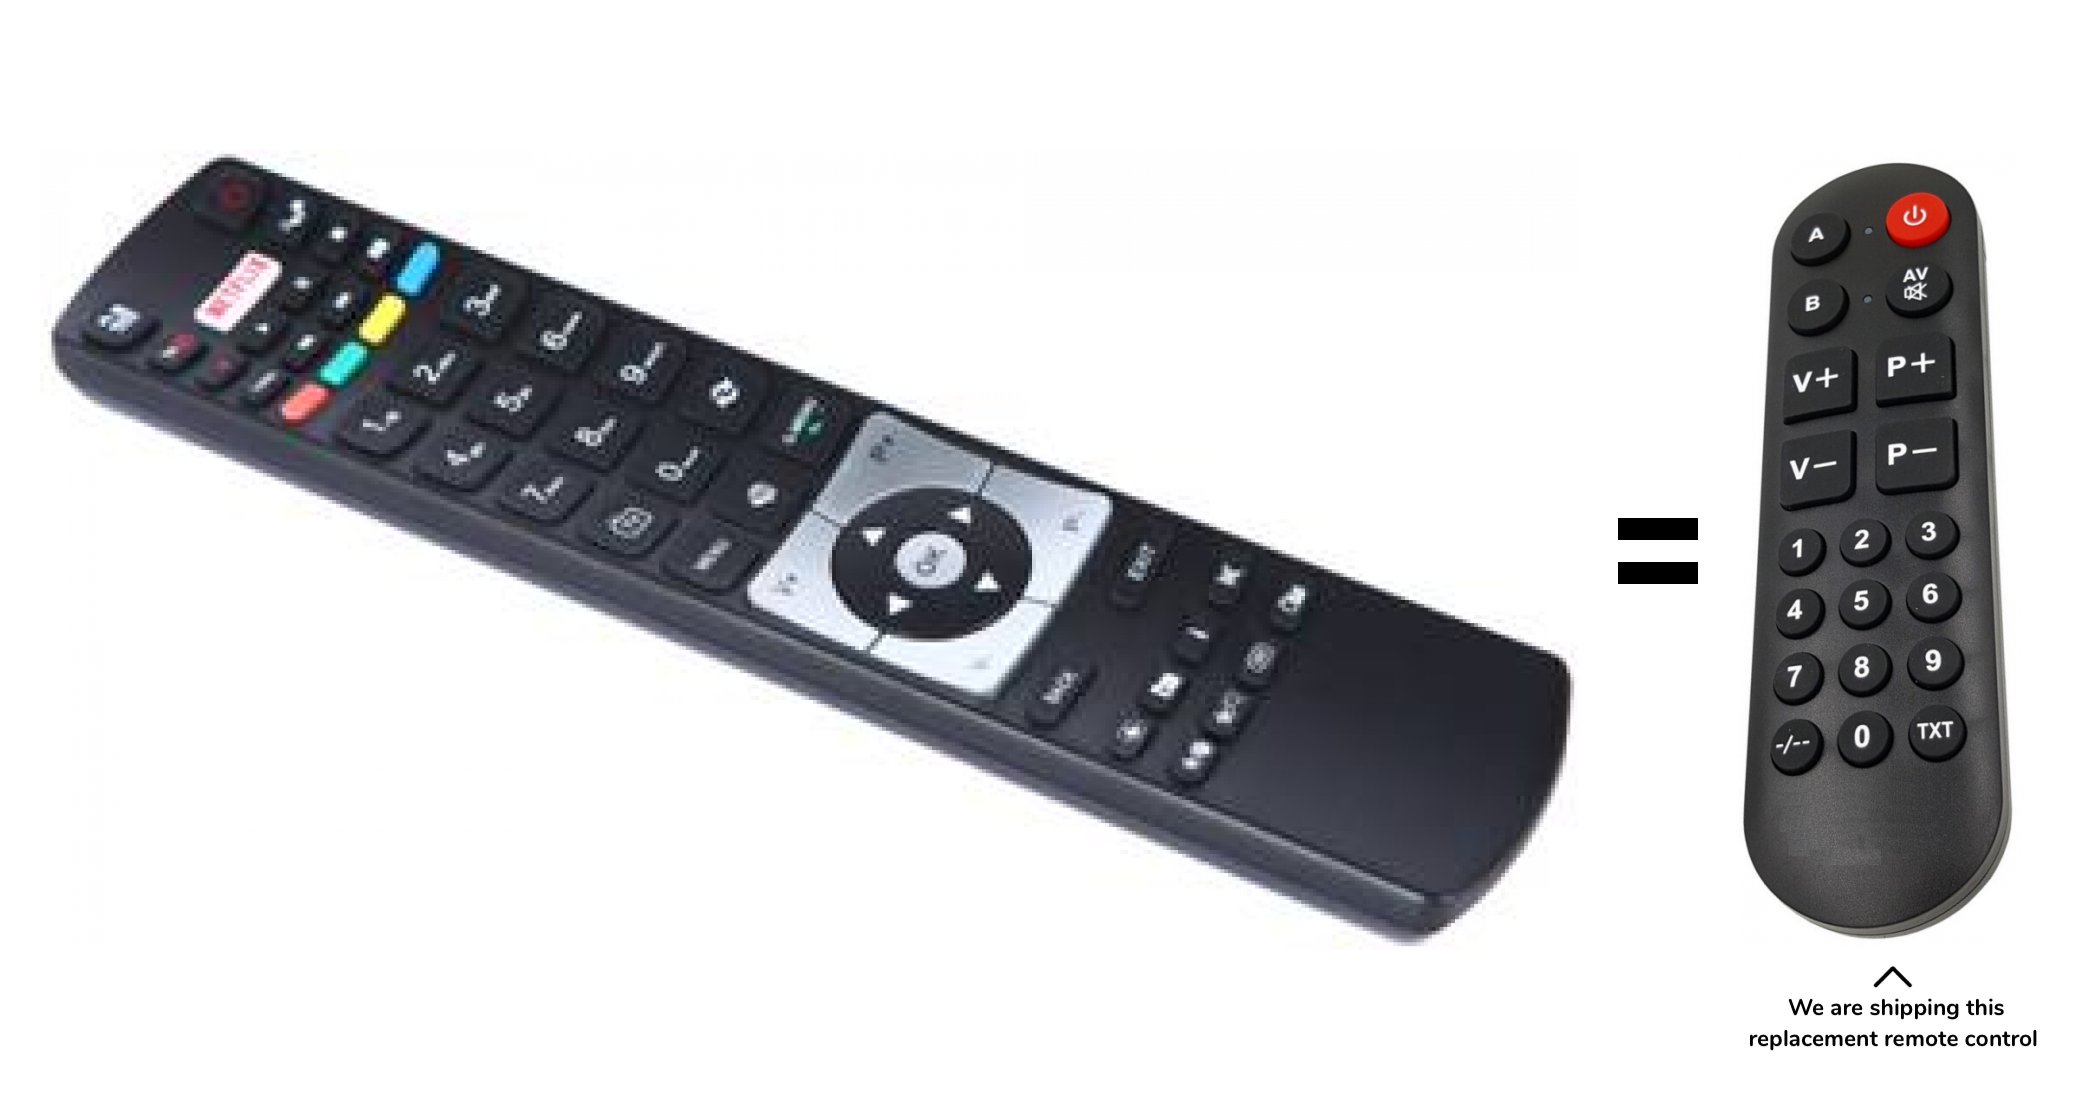 Hyundai ULV 50TS292 SMART remote control for seniors